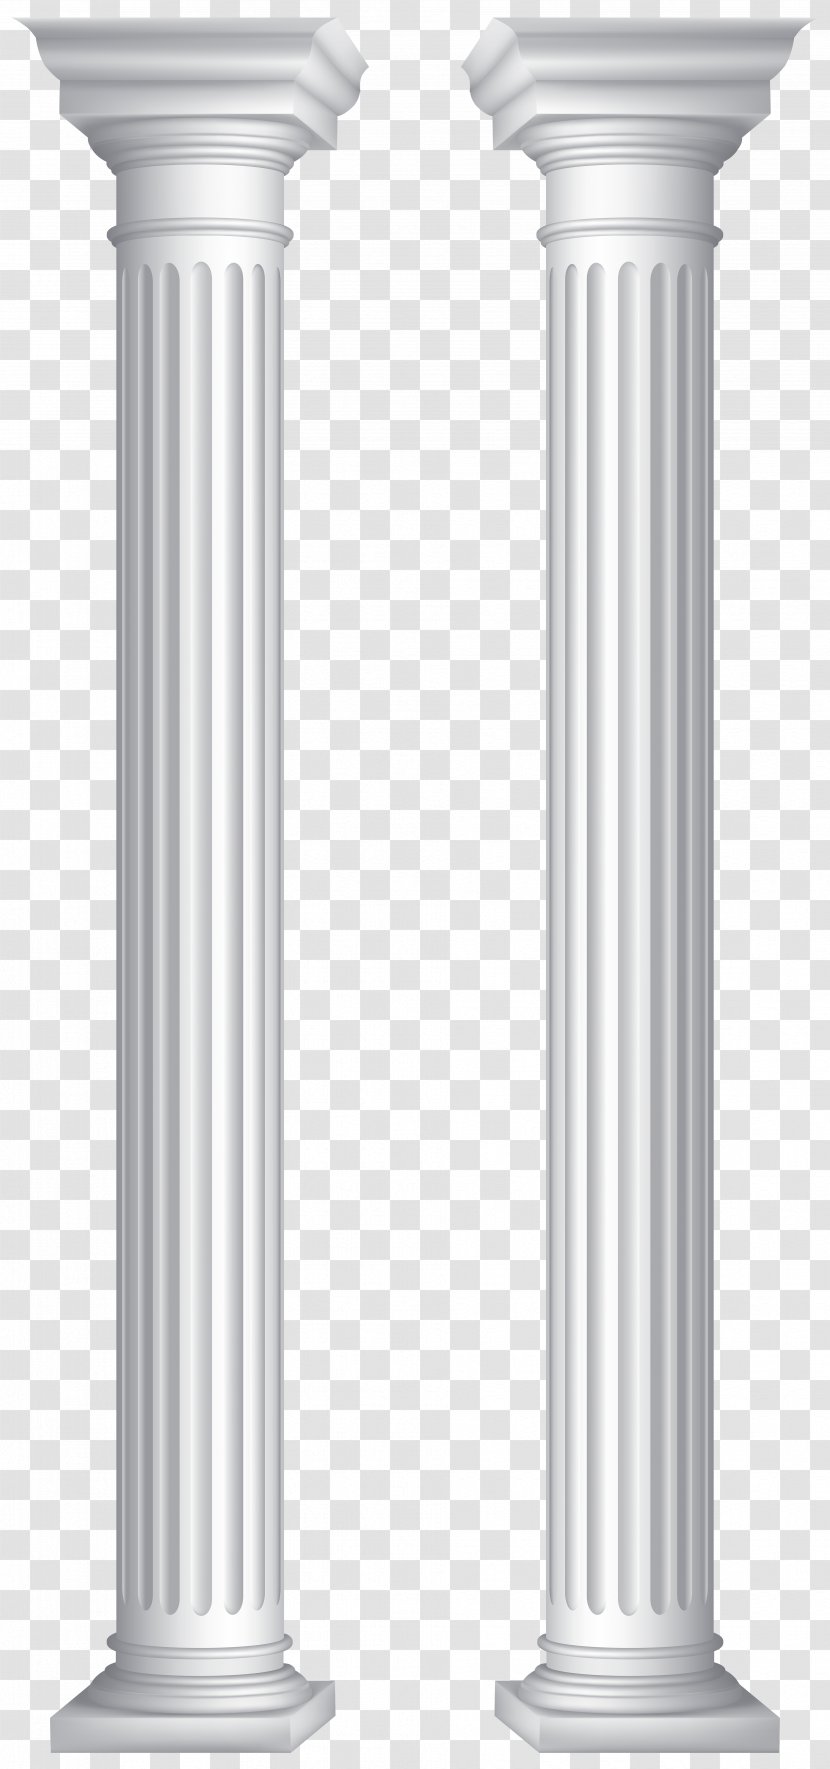 Column Clip Art - Columns Image Transparent PNG